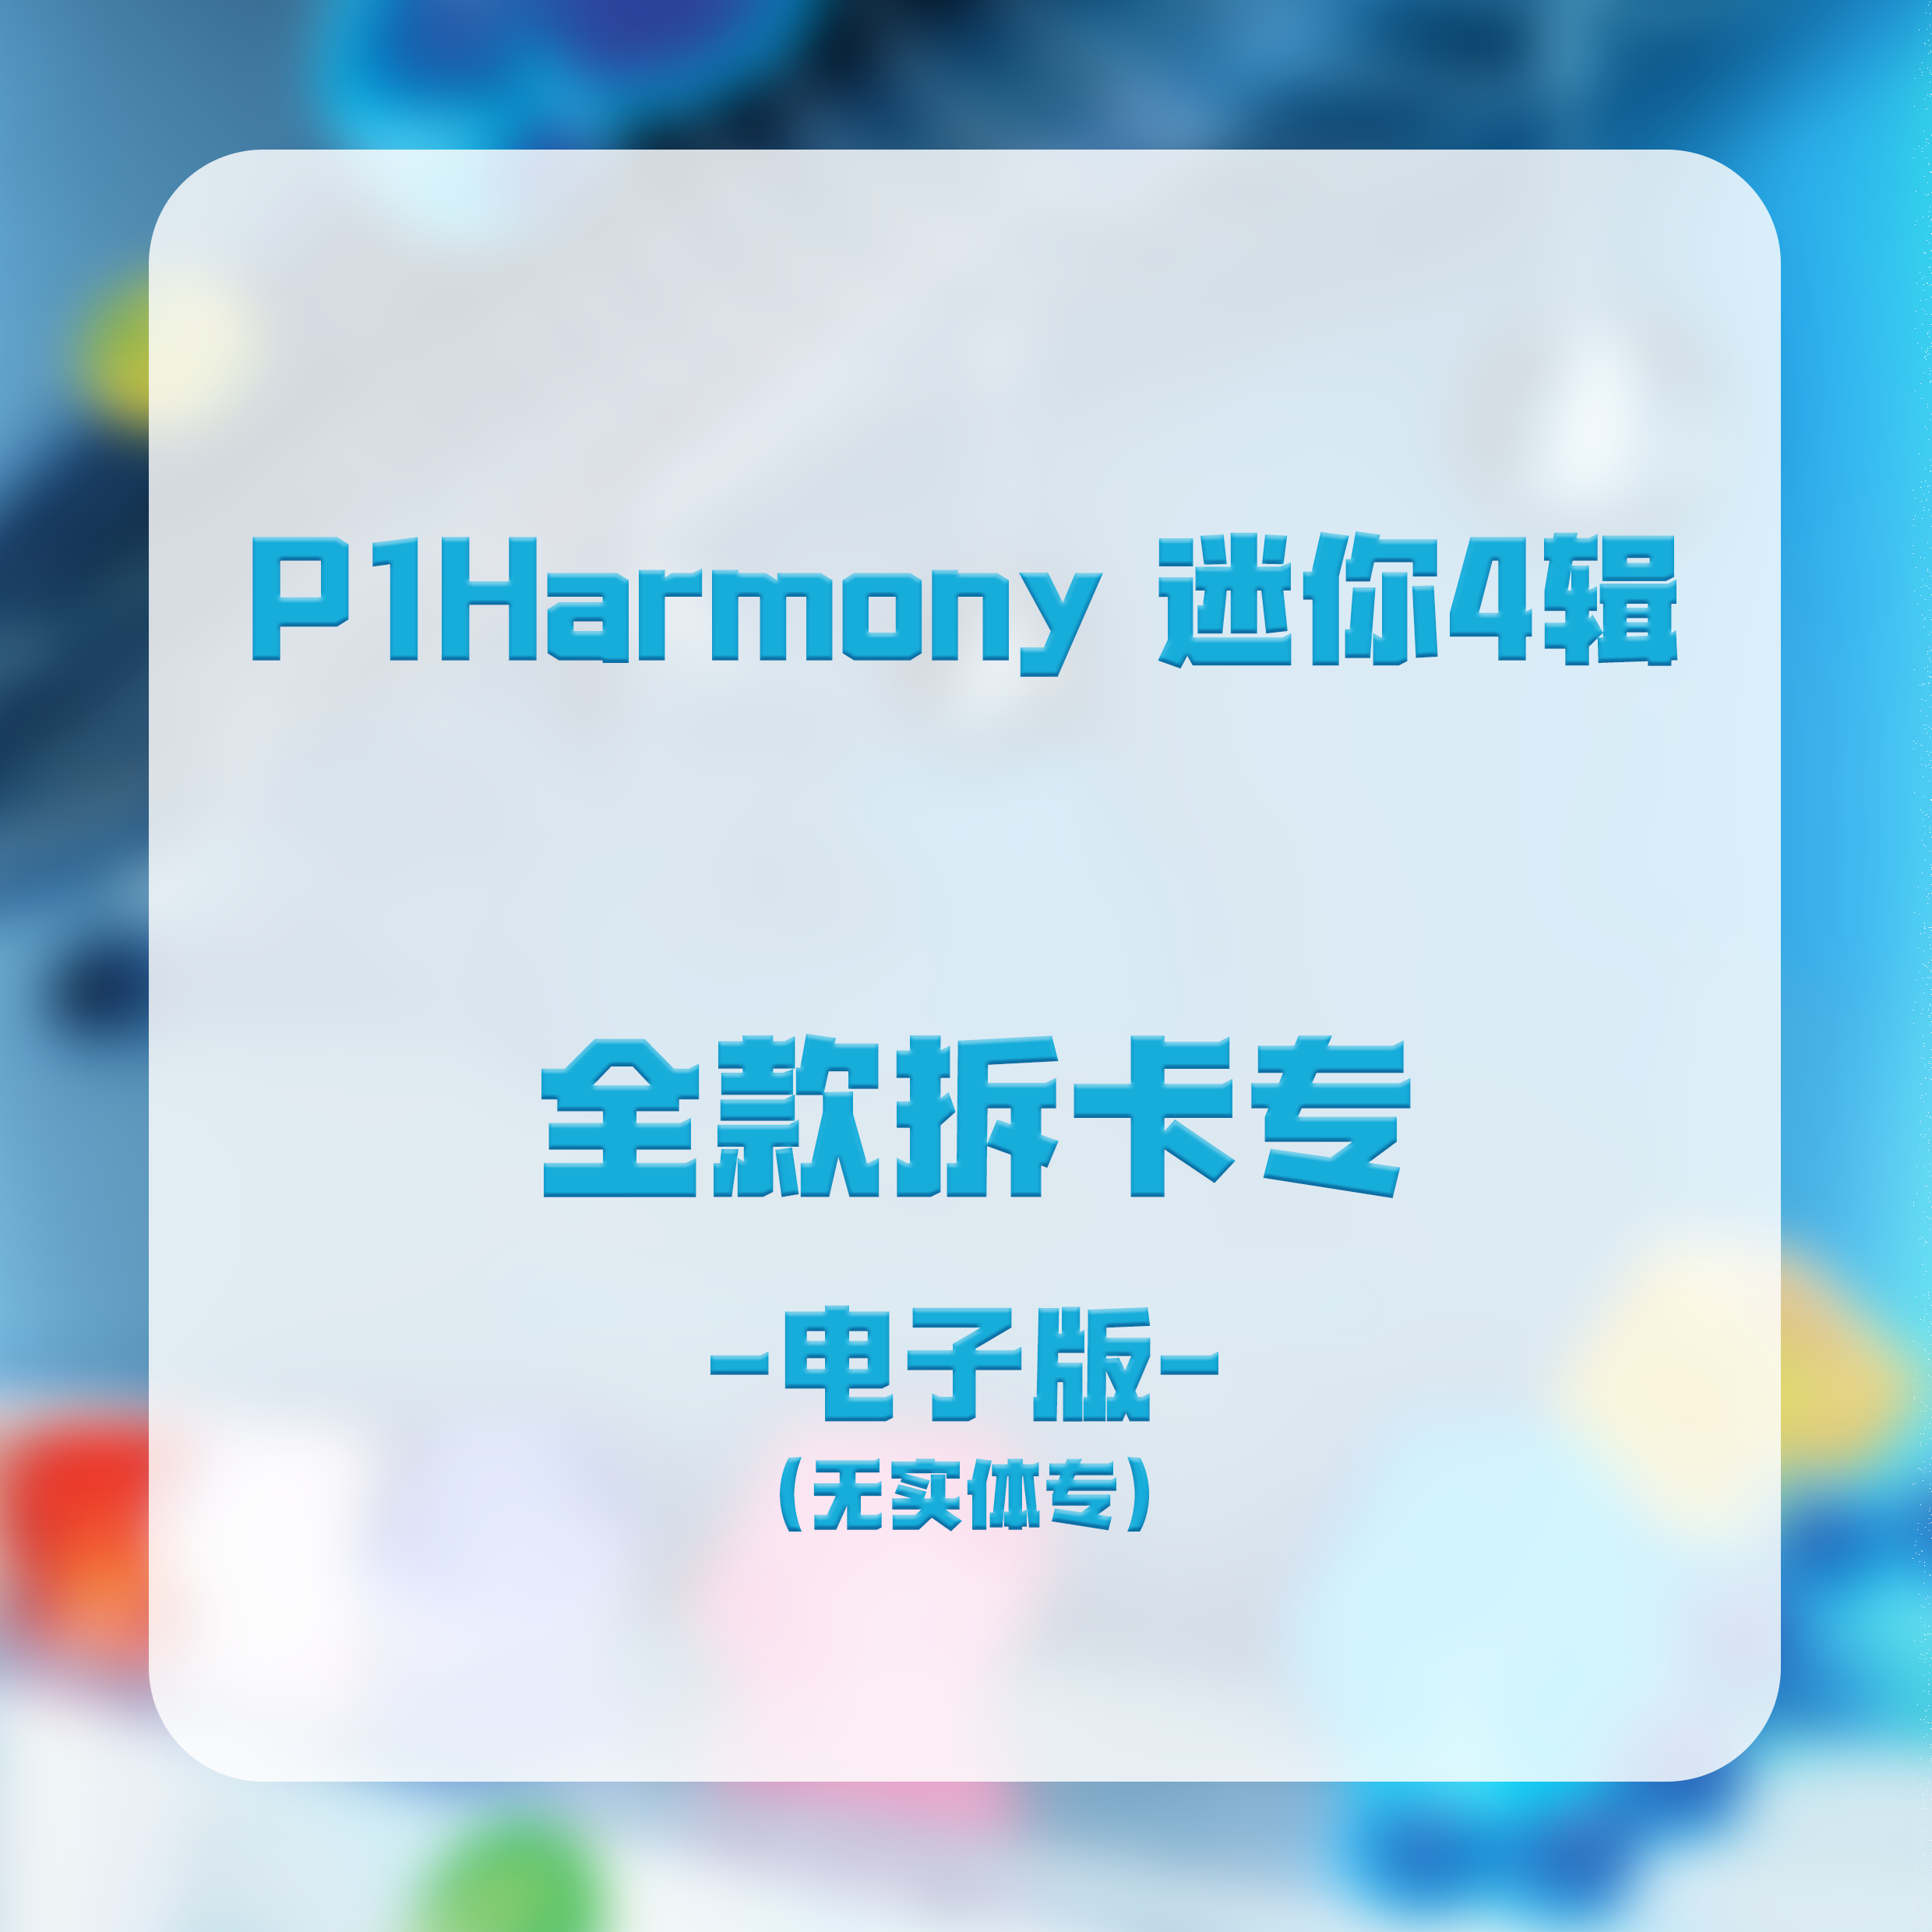 [拆卡专 电子版] P1Harmony - 4TH MINI ALBUM [HARMONY : ZERO IN] (Platform ver.) _Wildness_尹起昊DareU